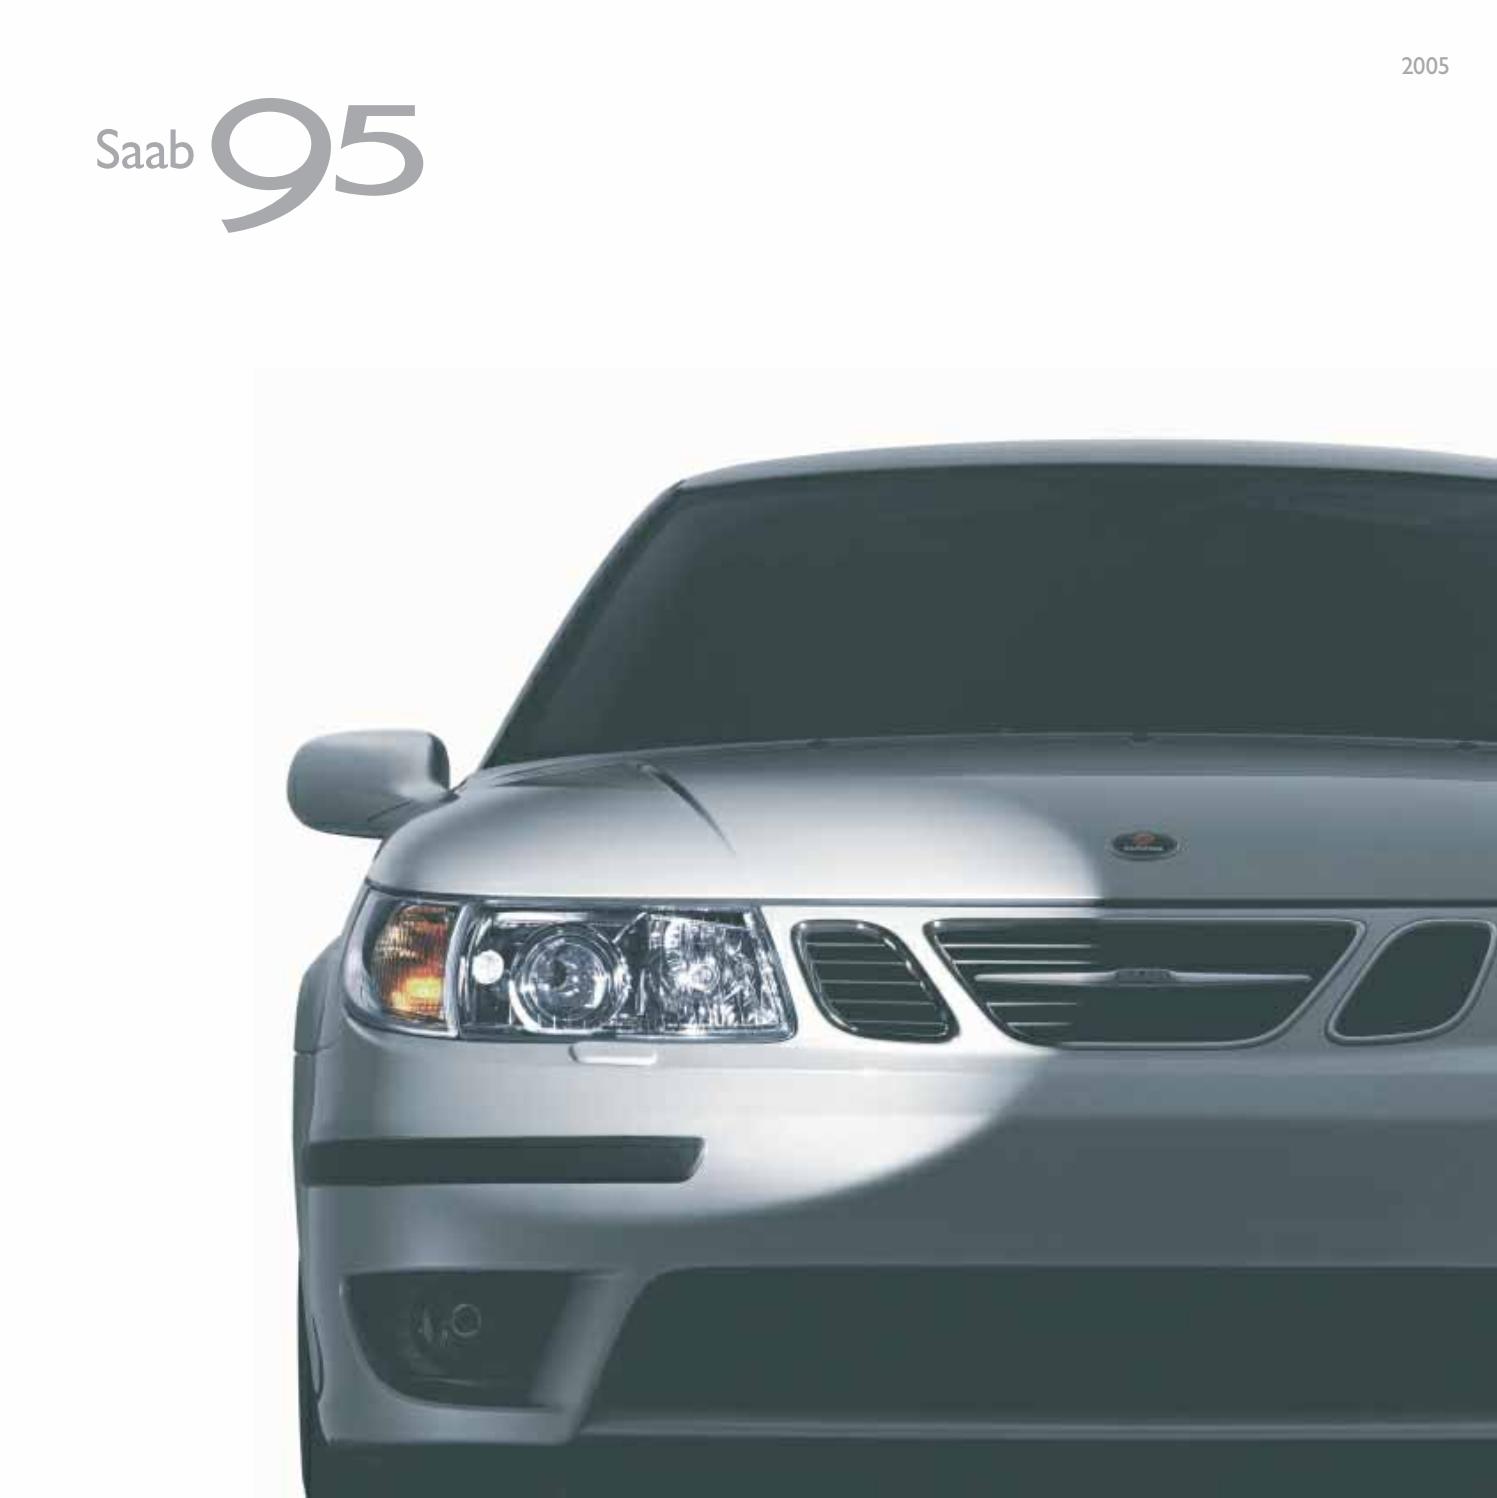 Saab 9-5 Brochure 2005 by Mustapha Mondeo - Issuu